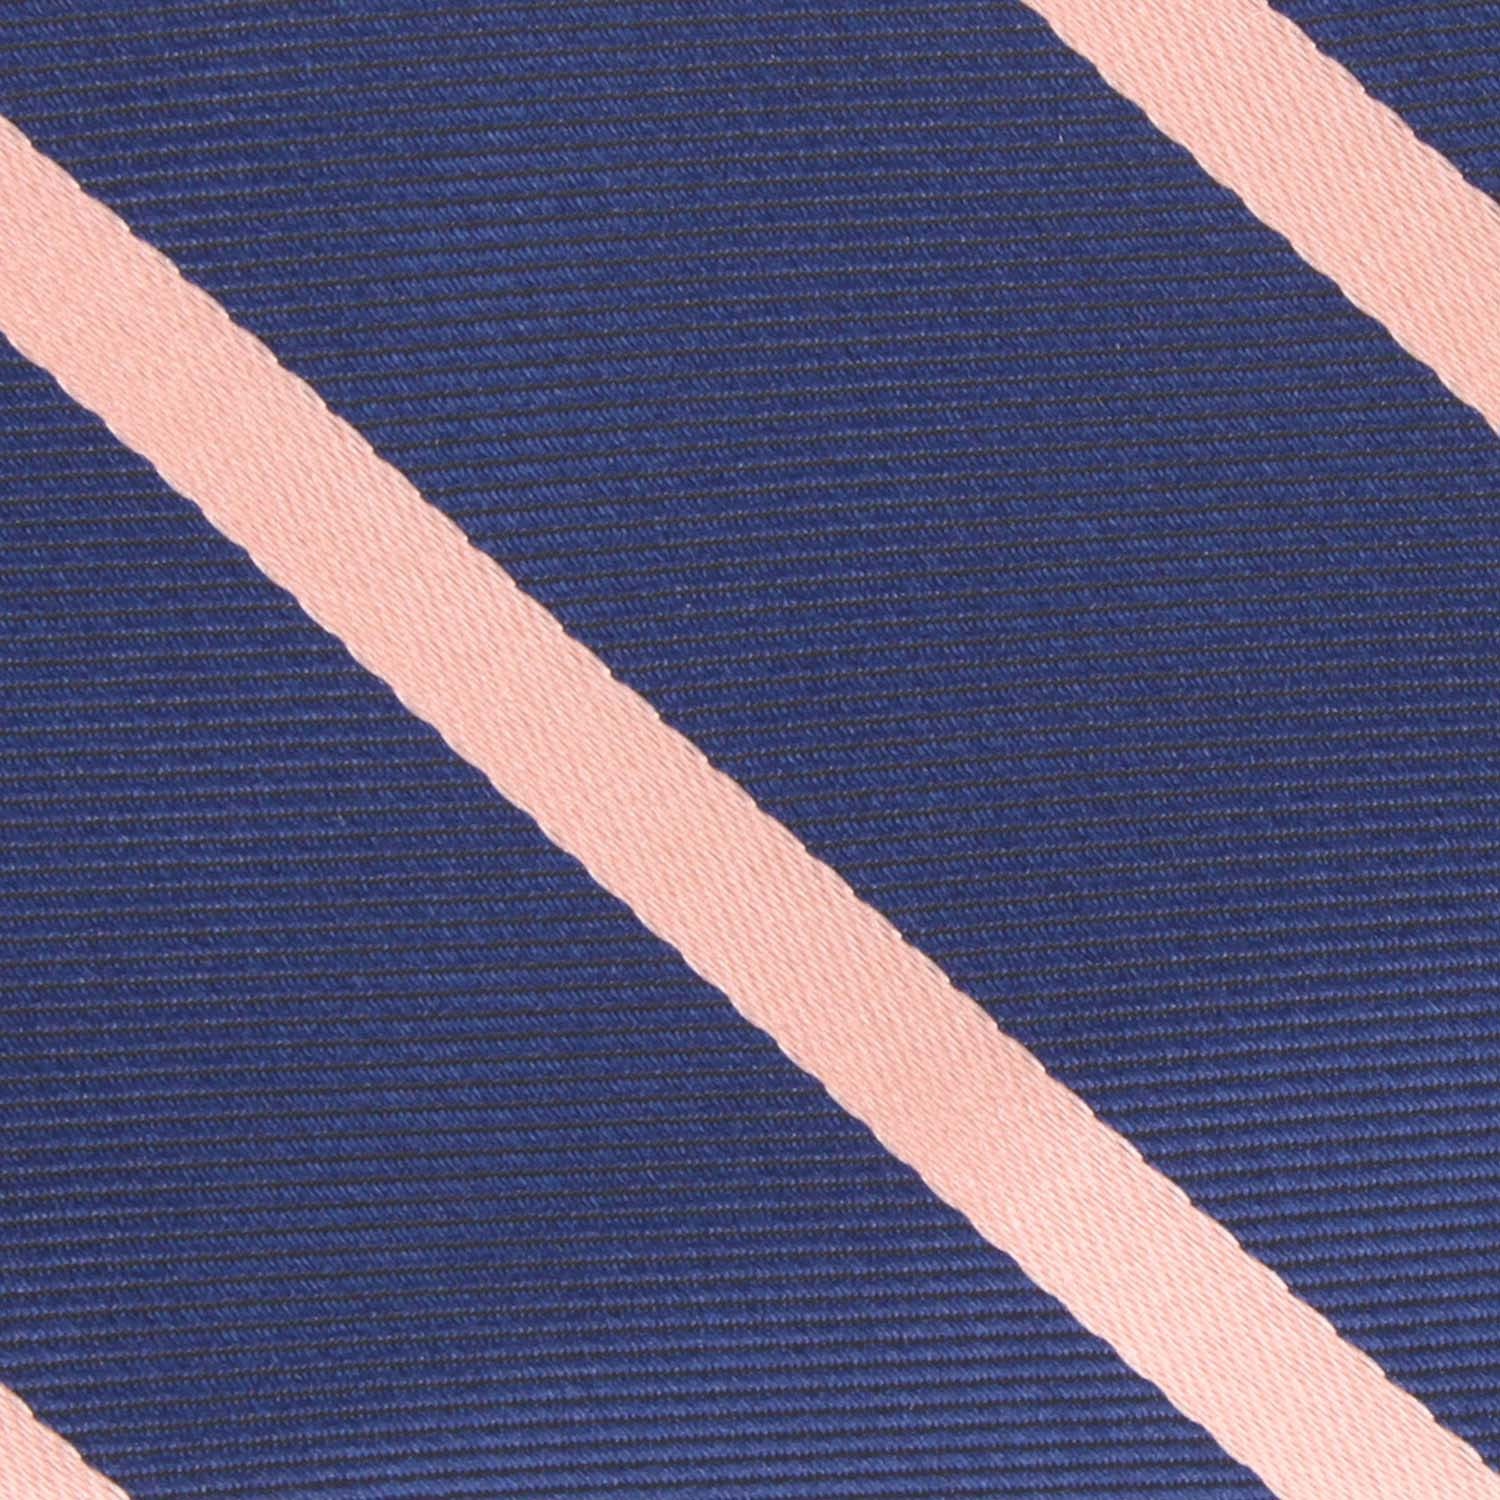 Navy Blue with Peach Stripes Fabric Self Tie Bow Tie M152